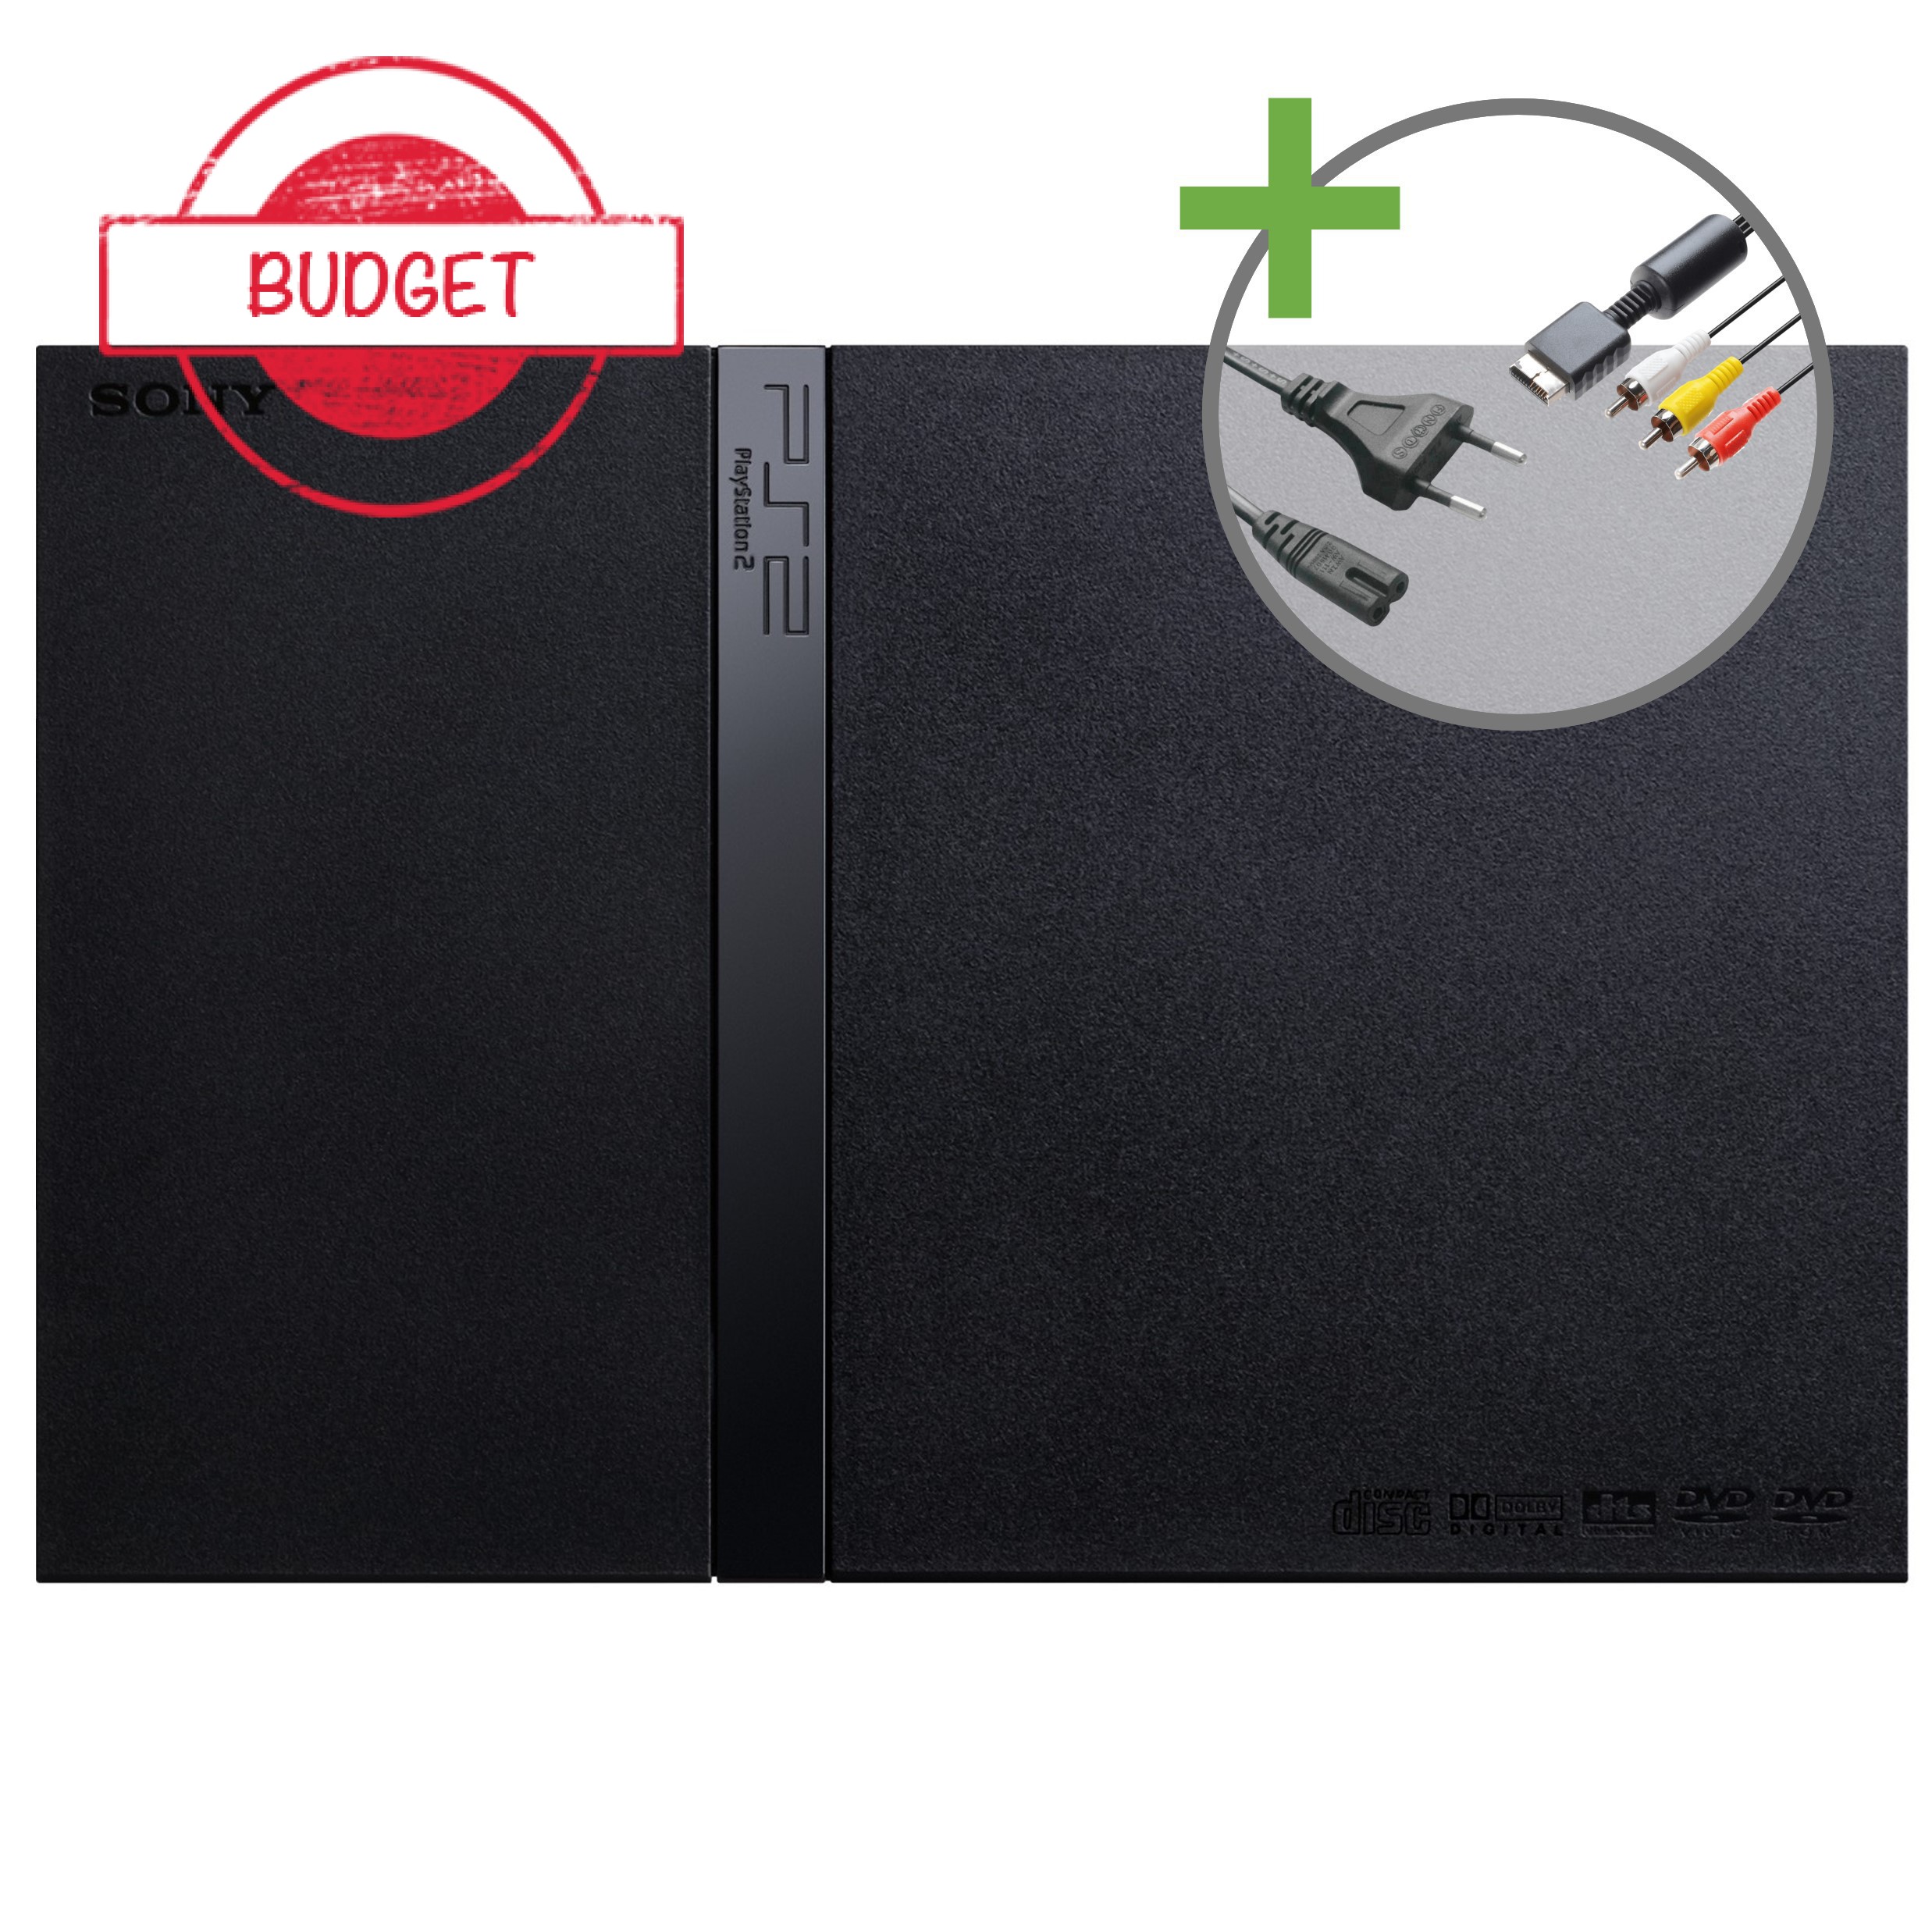 Sony PlayStation 2 Slim Starter Pack - Black Edition - Budget - Playstation 2 Hardware - 3